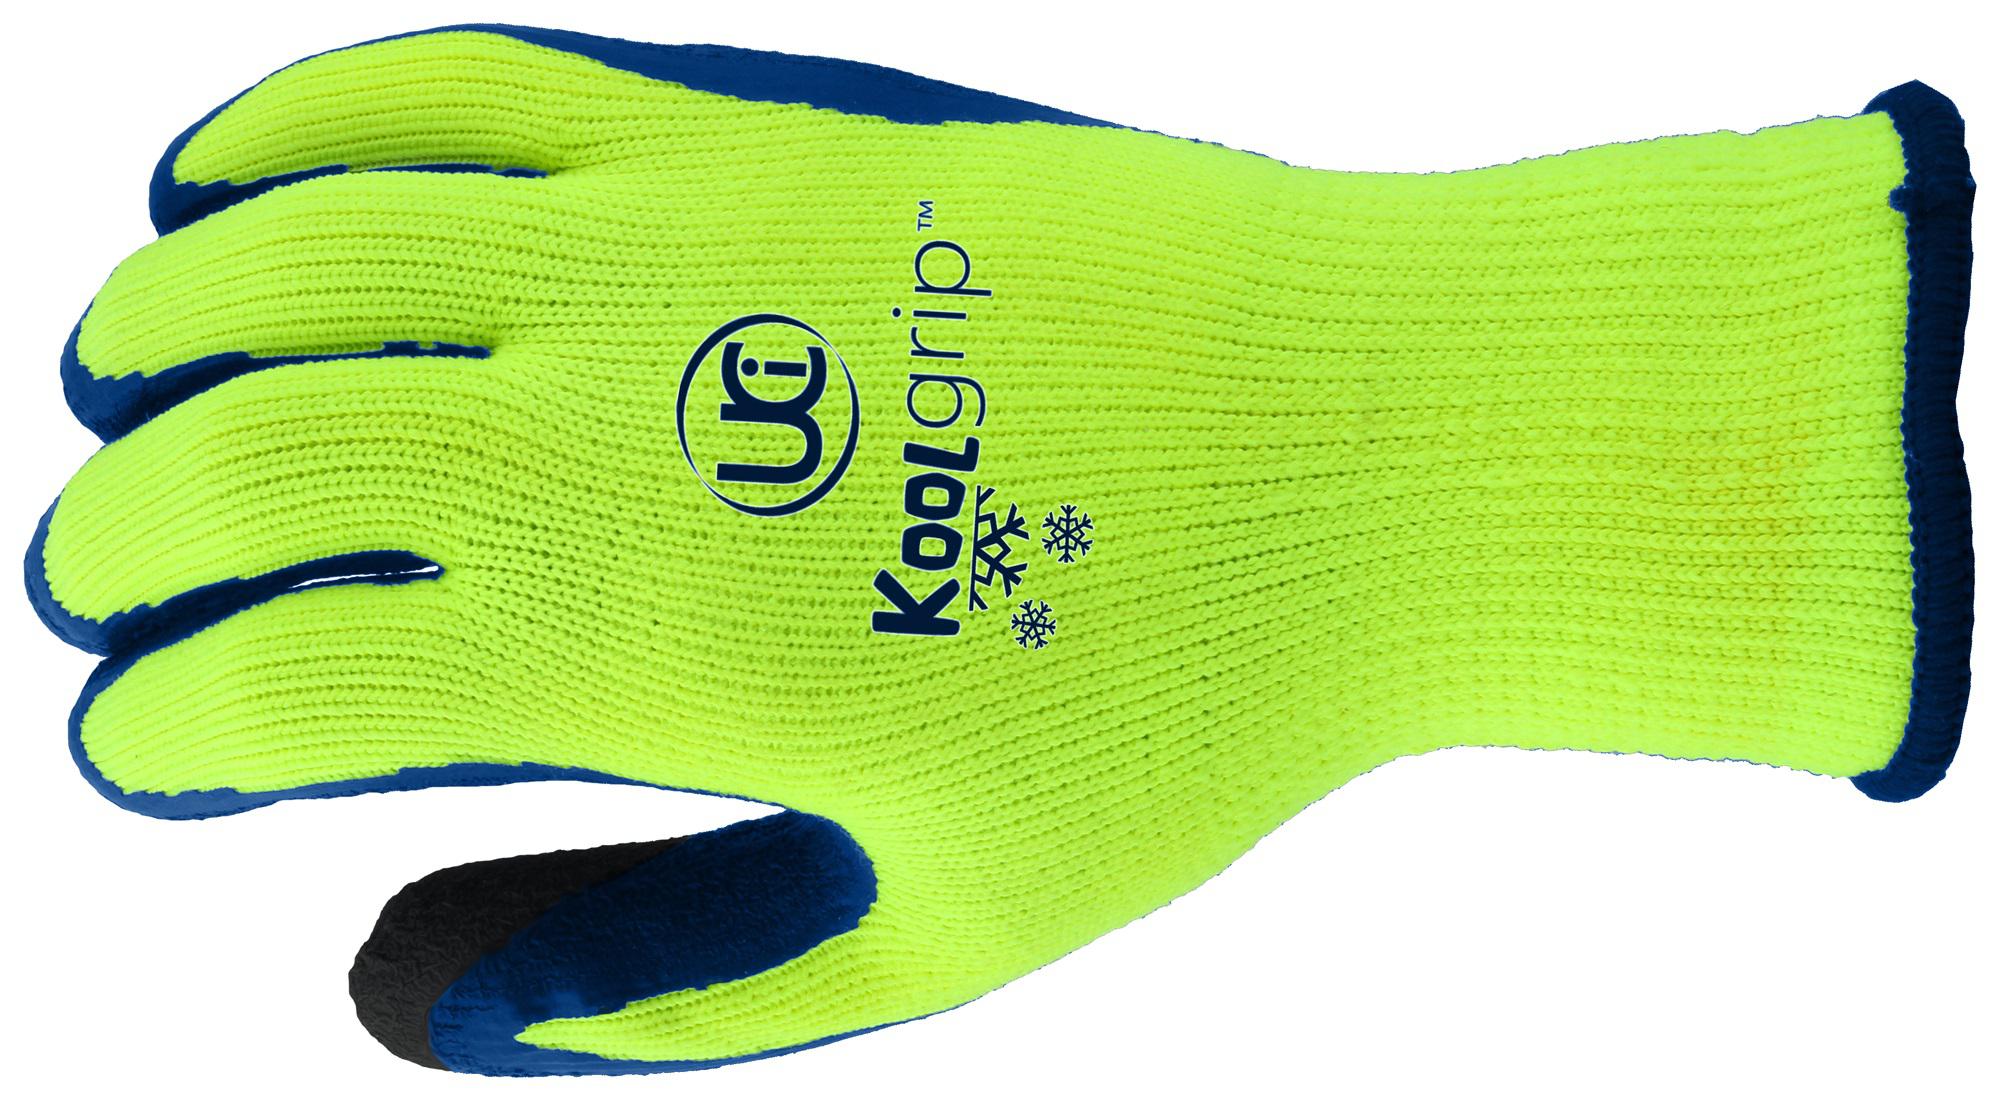 Uci G/koolgrip/ye/10 Thermal Latex Gloves, Pet, Blu/yel, Xl